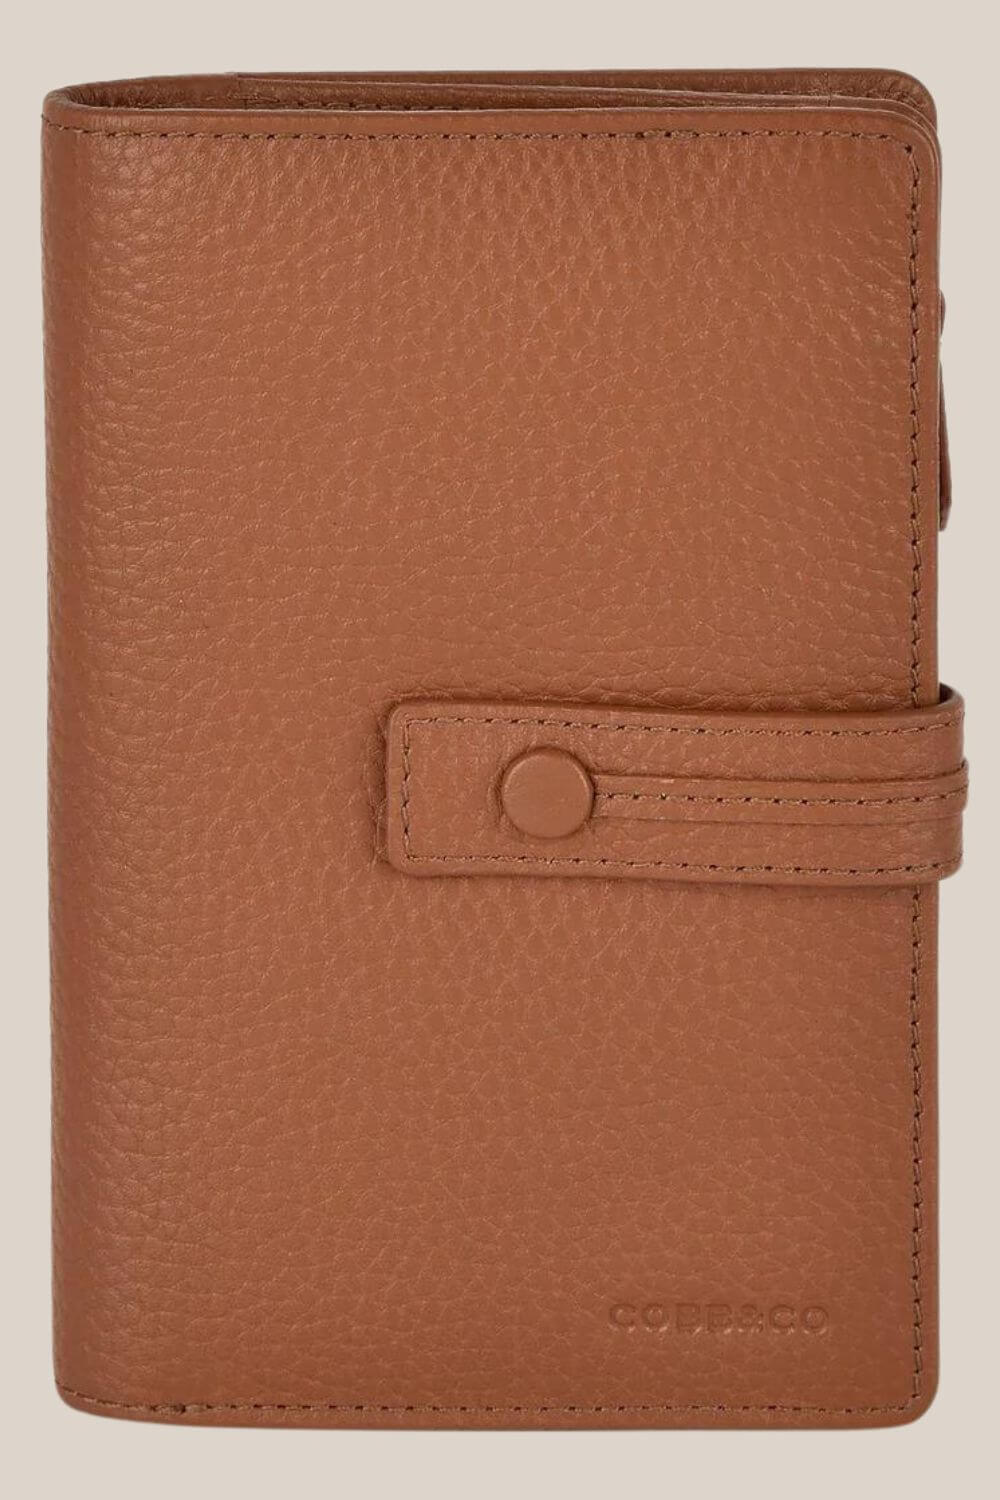 Cobb & Co Epsom Leather Medium Wallet